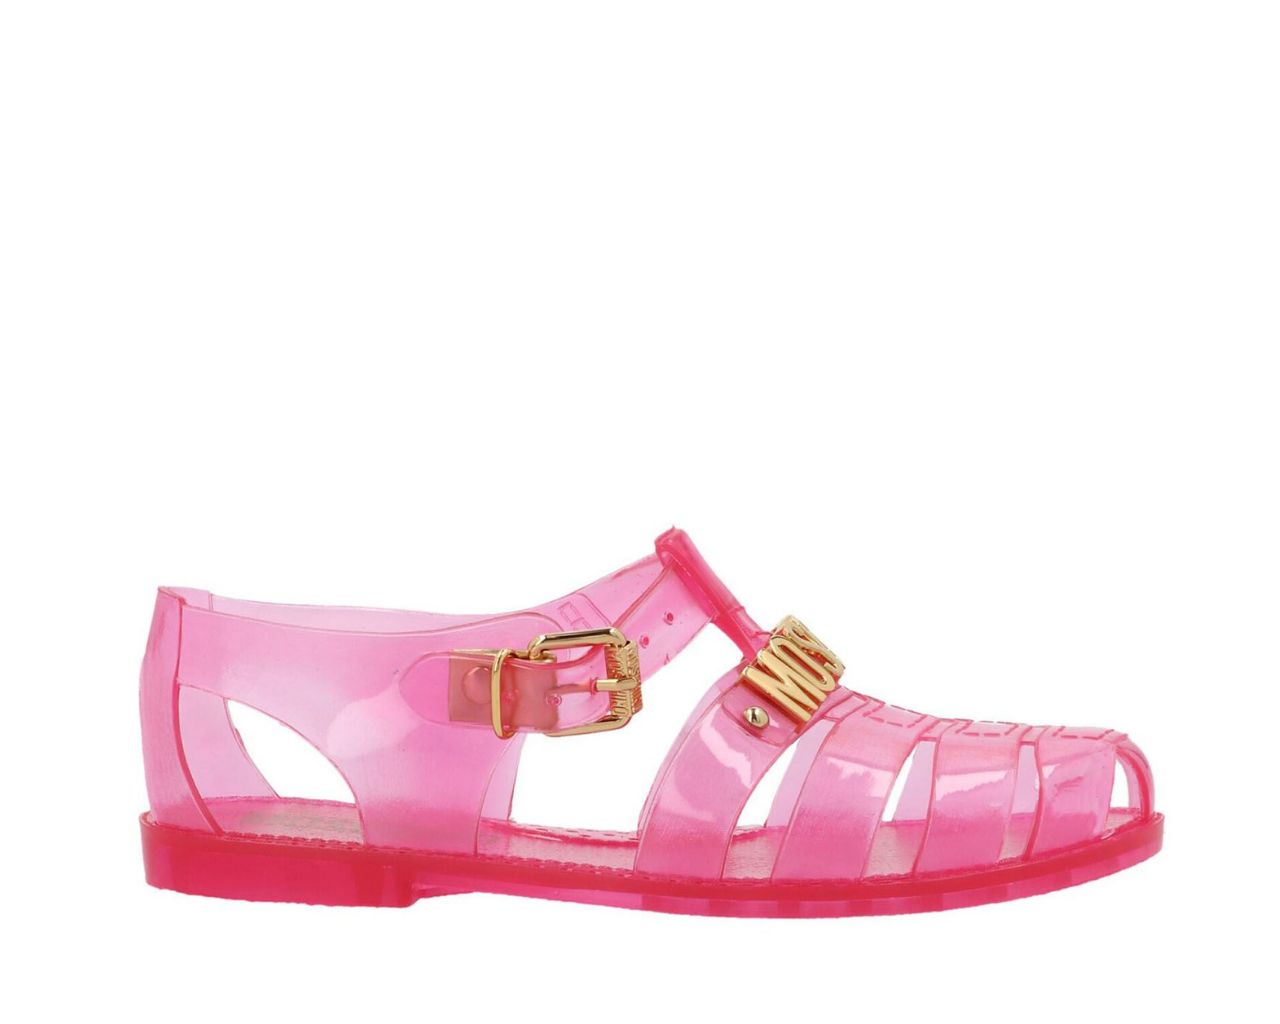 Jelly Sandals Trend for Summer 2021: Shop GRAZIA's Picks